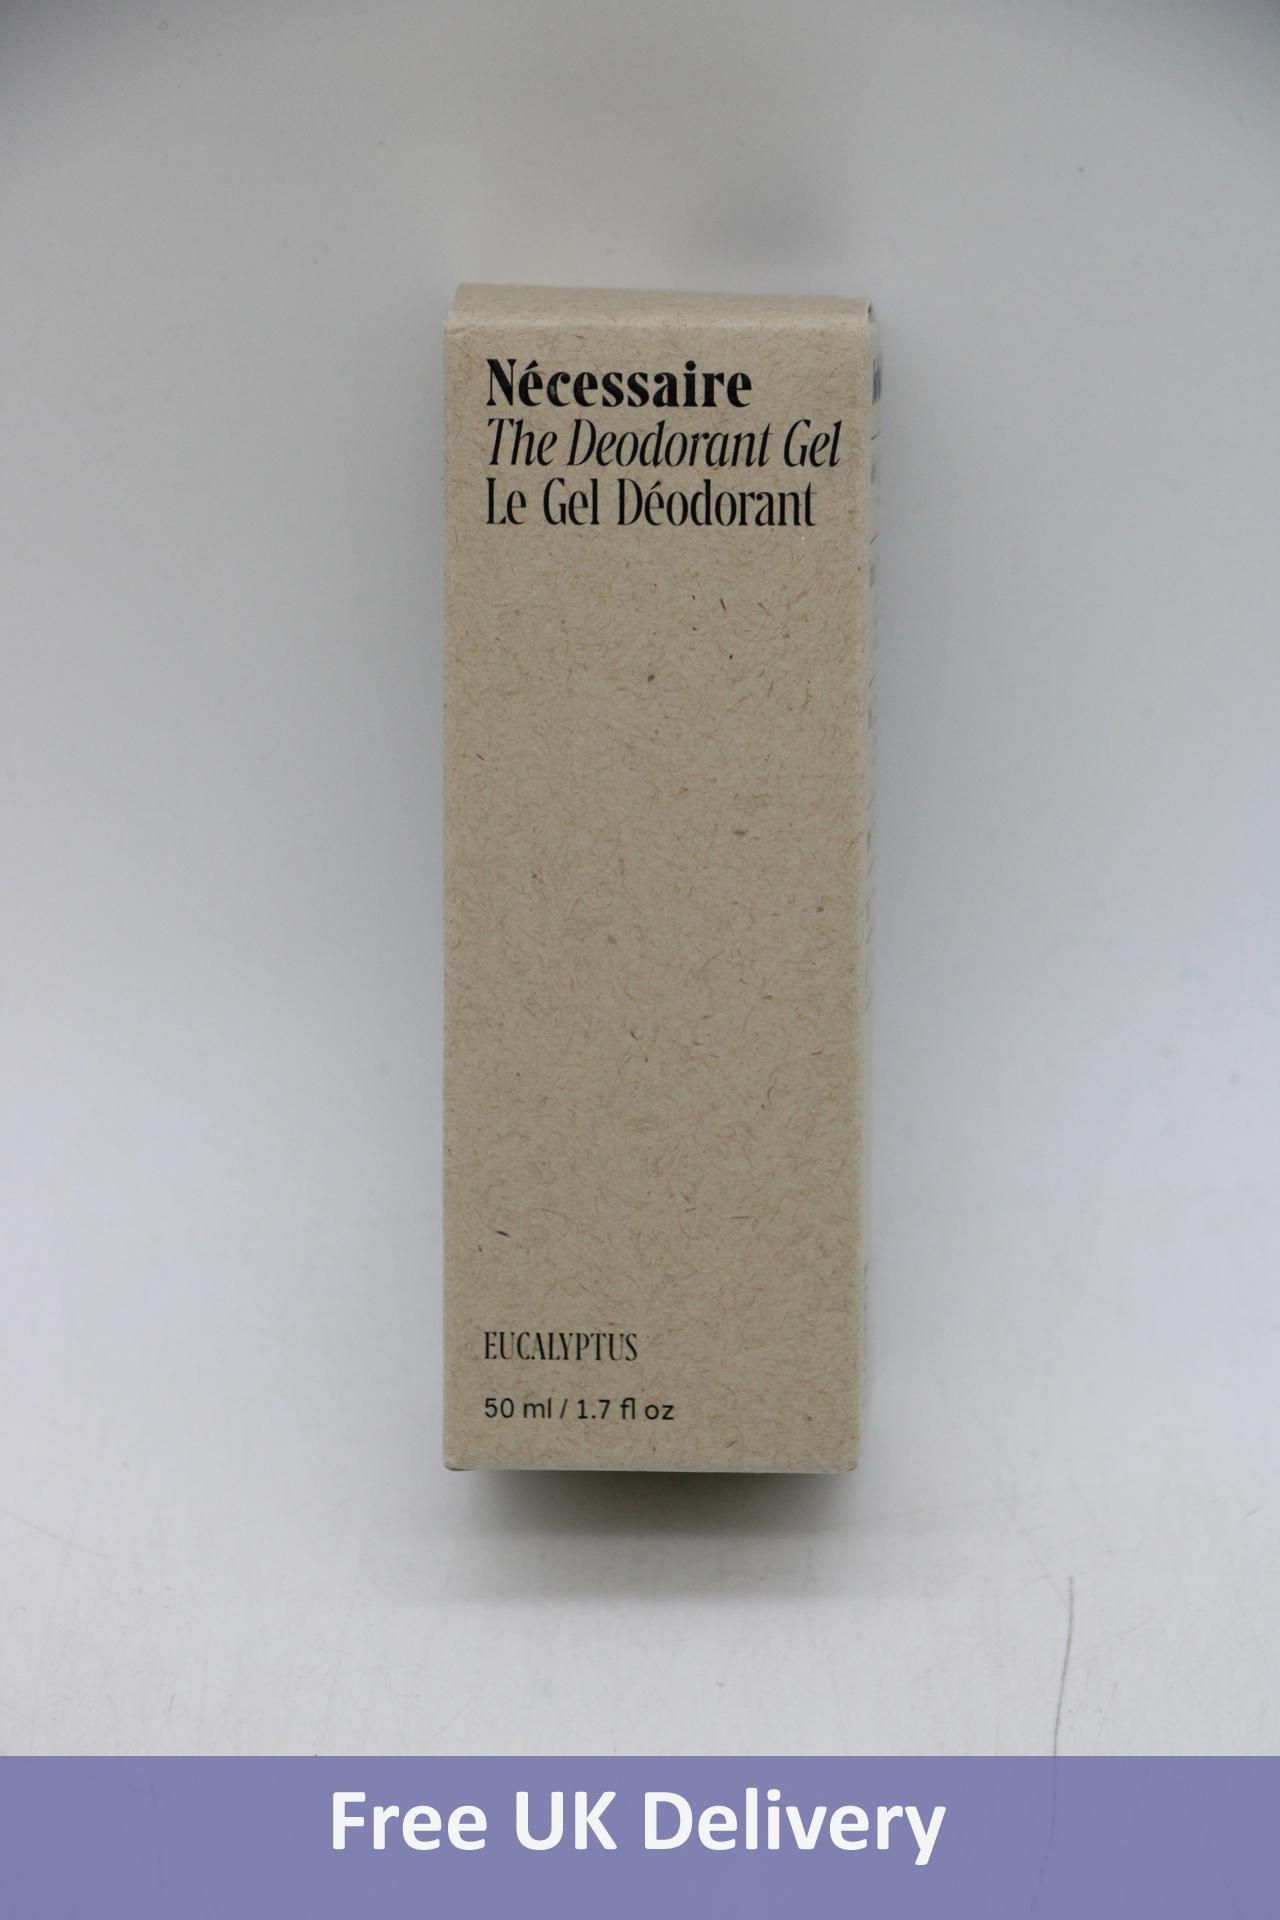 Fifteen bottles of Necessaire The Deodorant Gel Eucalyptus, Lime Green, Size 50ml - Image 2 of 5